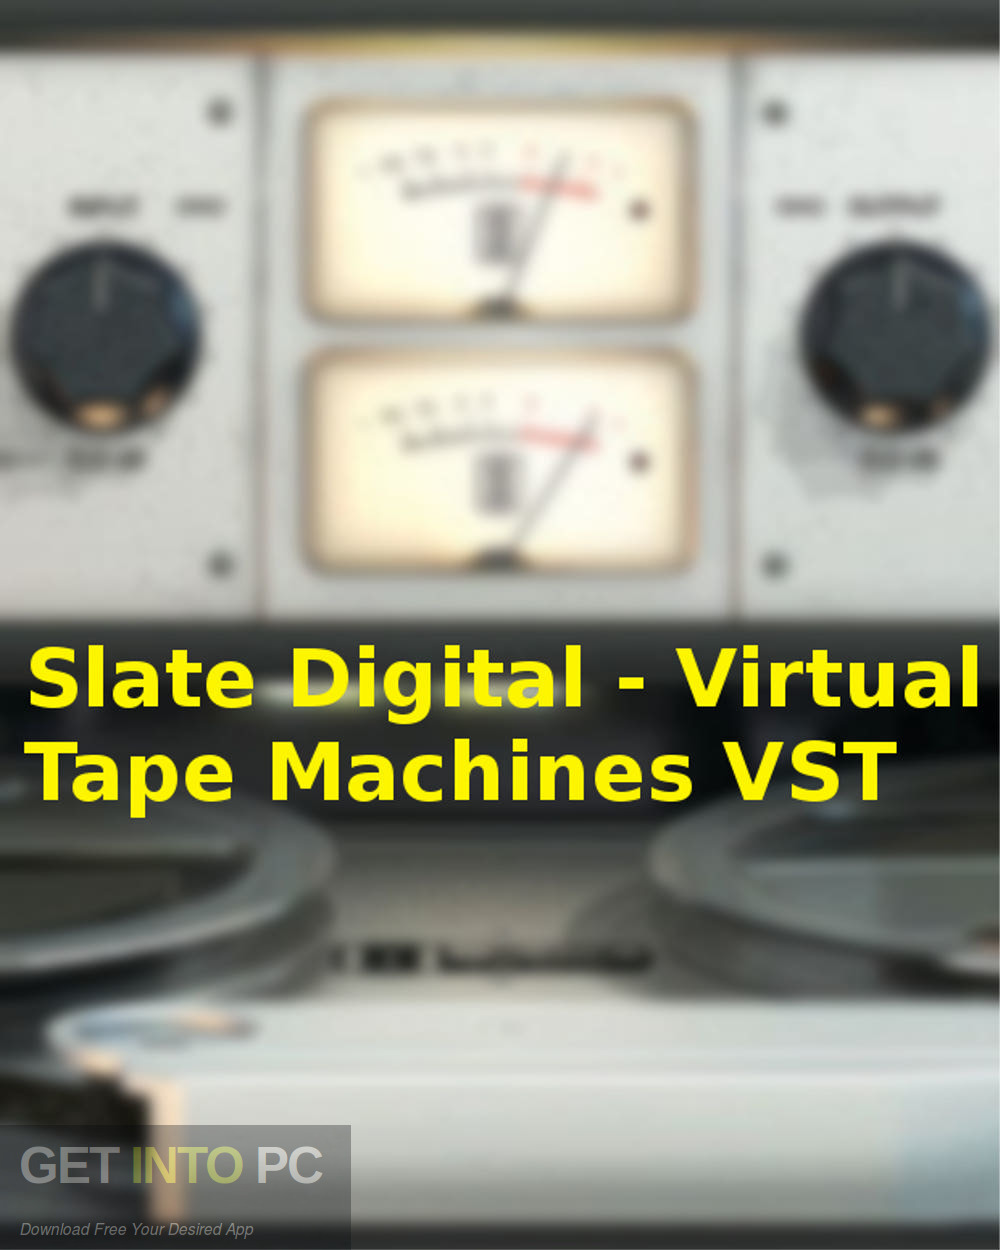 Slate Digital - Virtual Tape Machines VST Free Download-GetintoPC.com